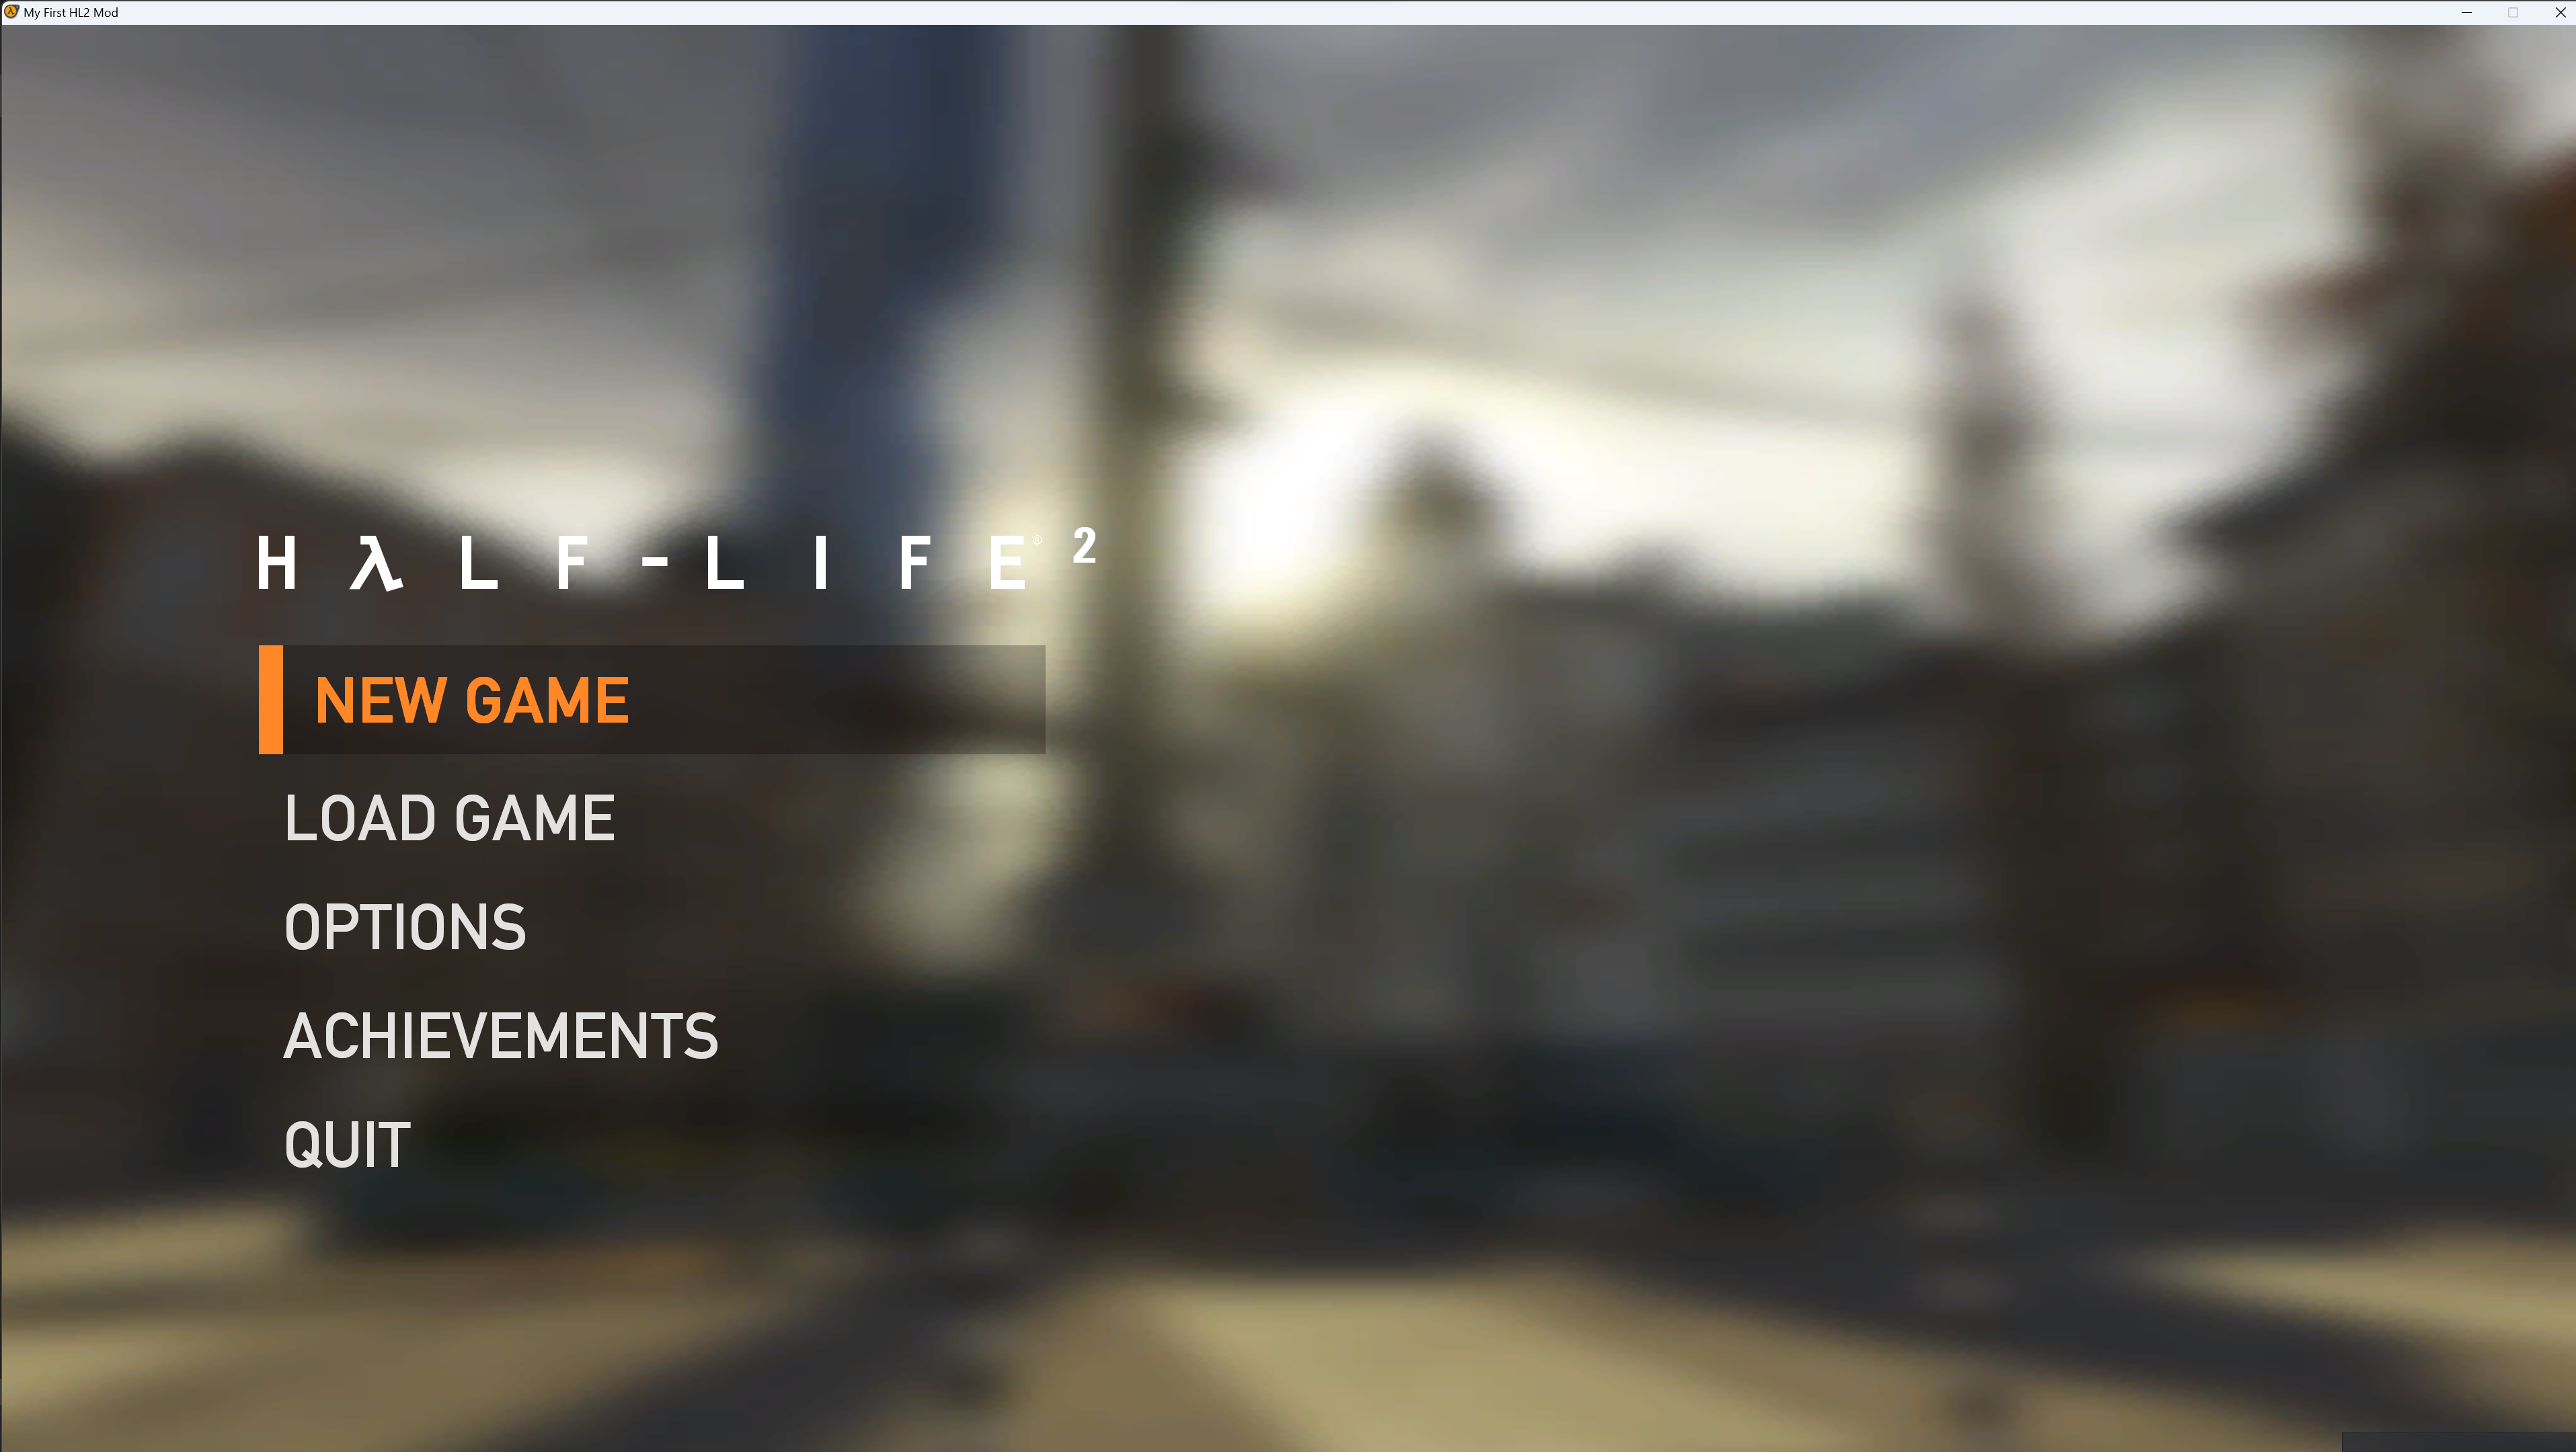 Image of Half-Life 2 main menu with GamepadUI